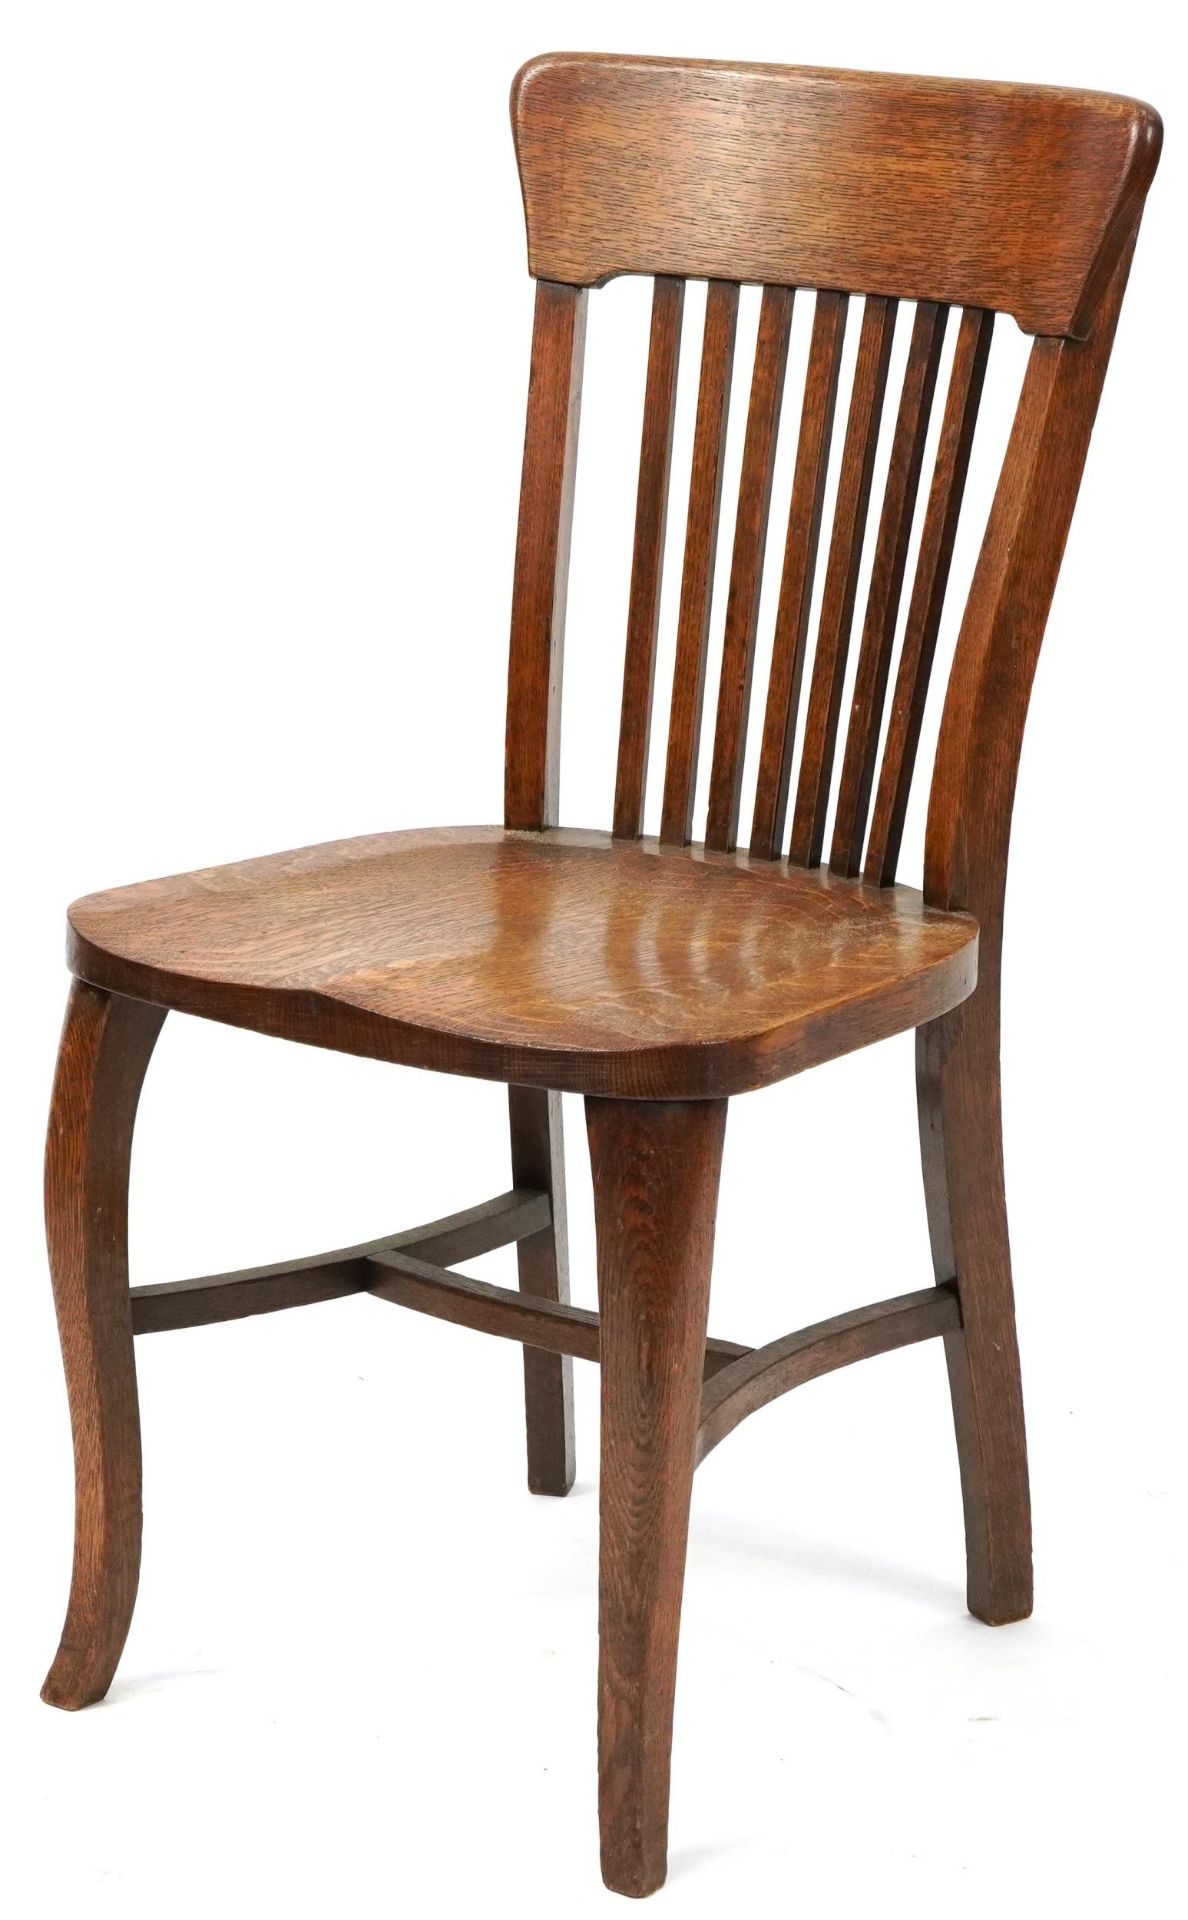 Antique oak chair with H stretcher, 90cm high